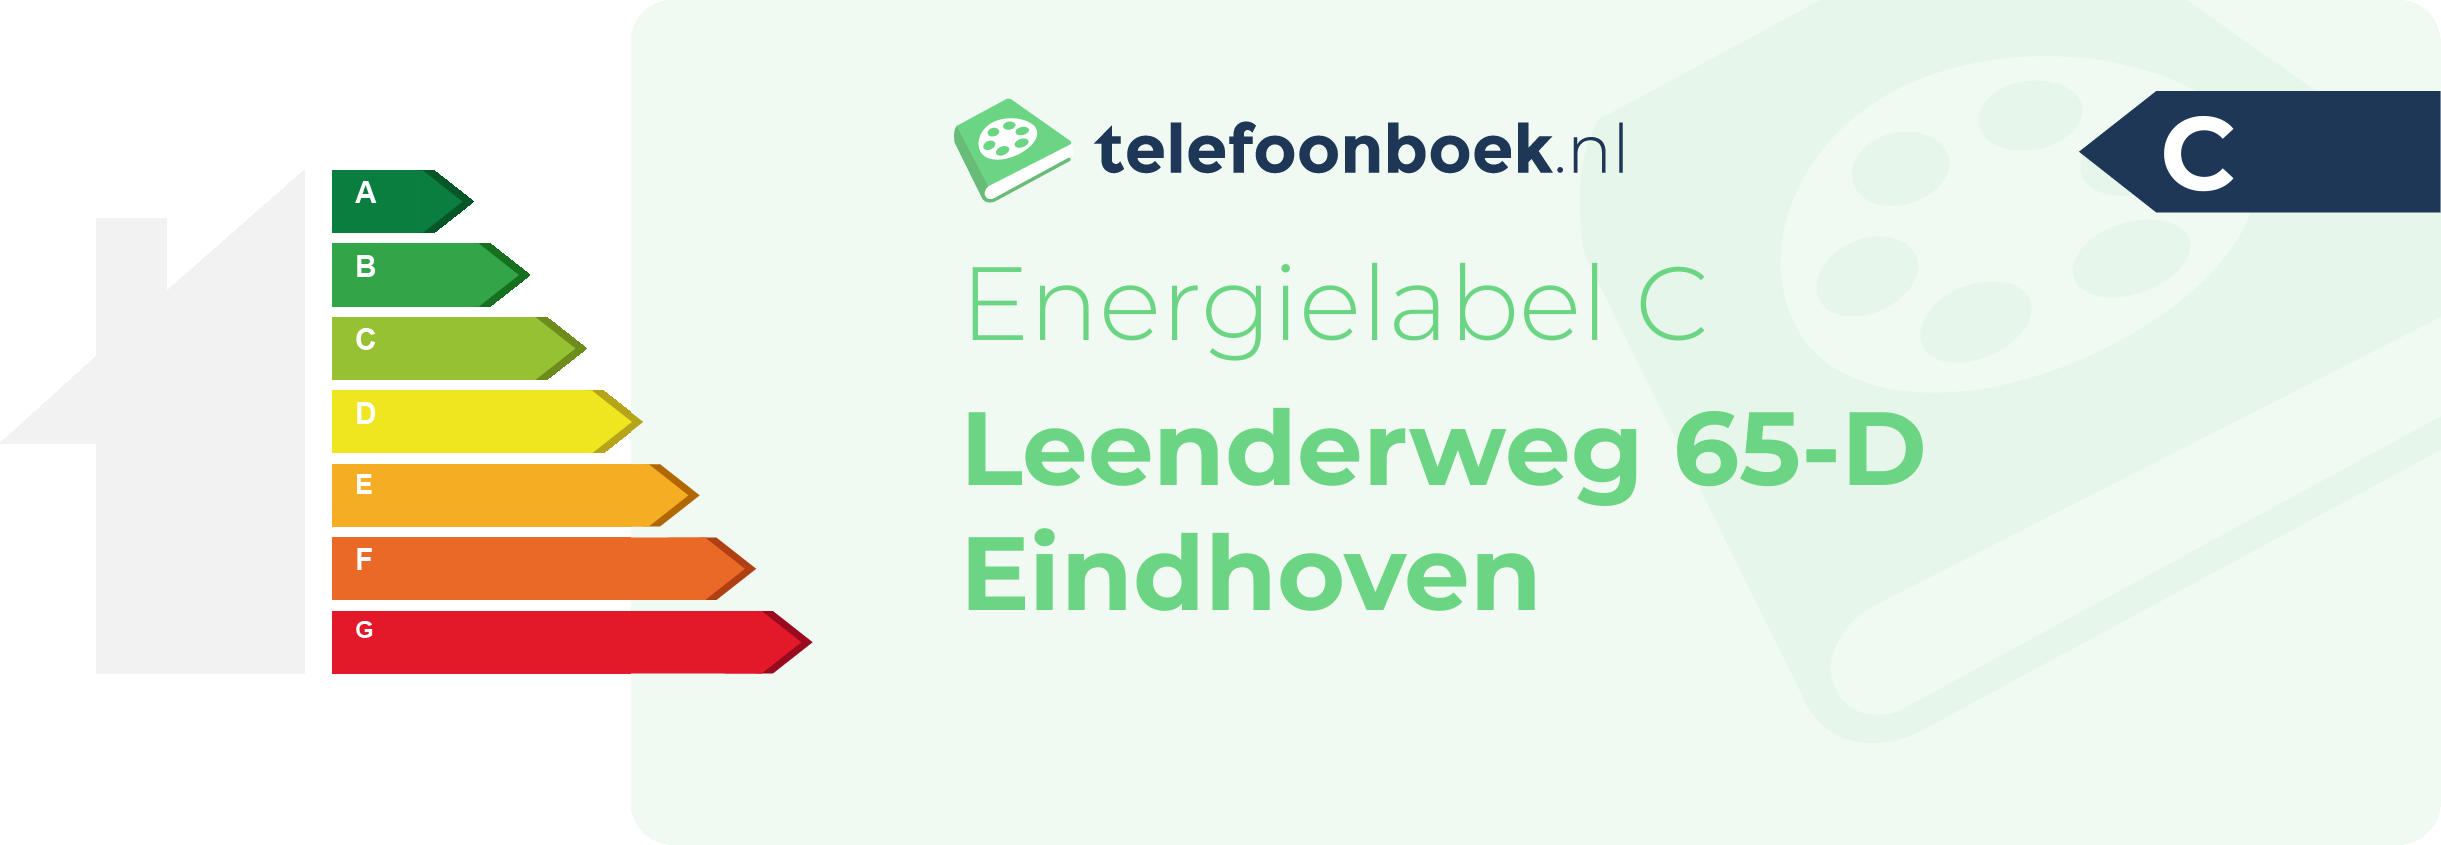 Energielabel Leenderweg 65-D Eindhoven